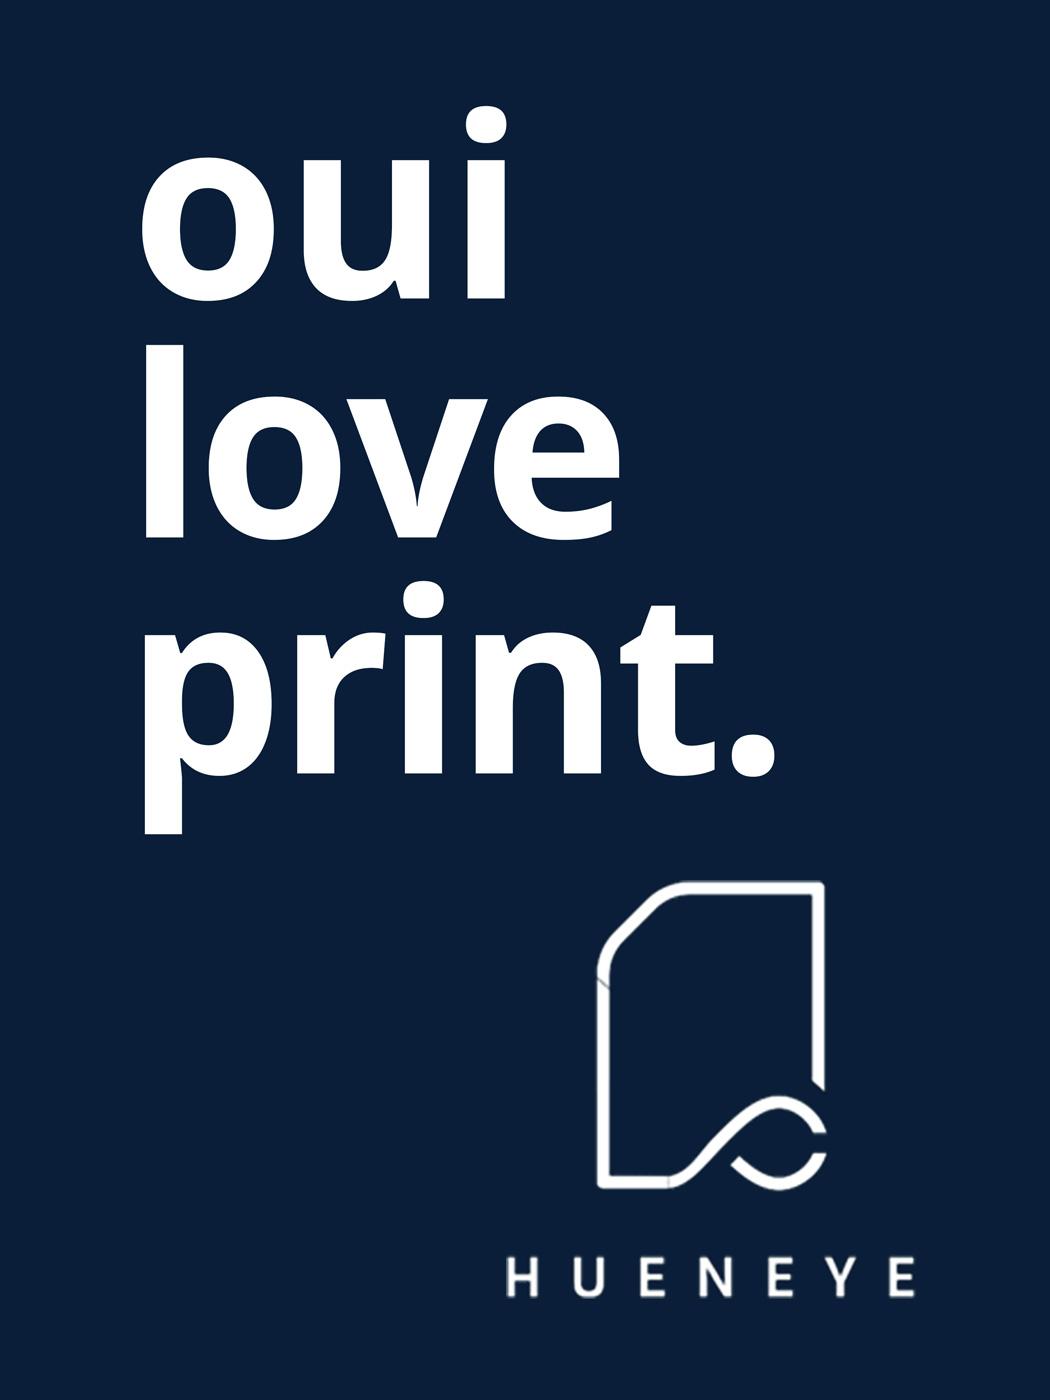  Oui love print, slogan de l'imprimerie Hueneye.